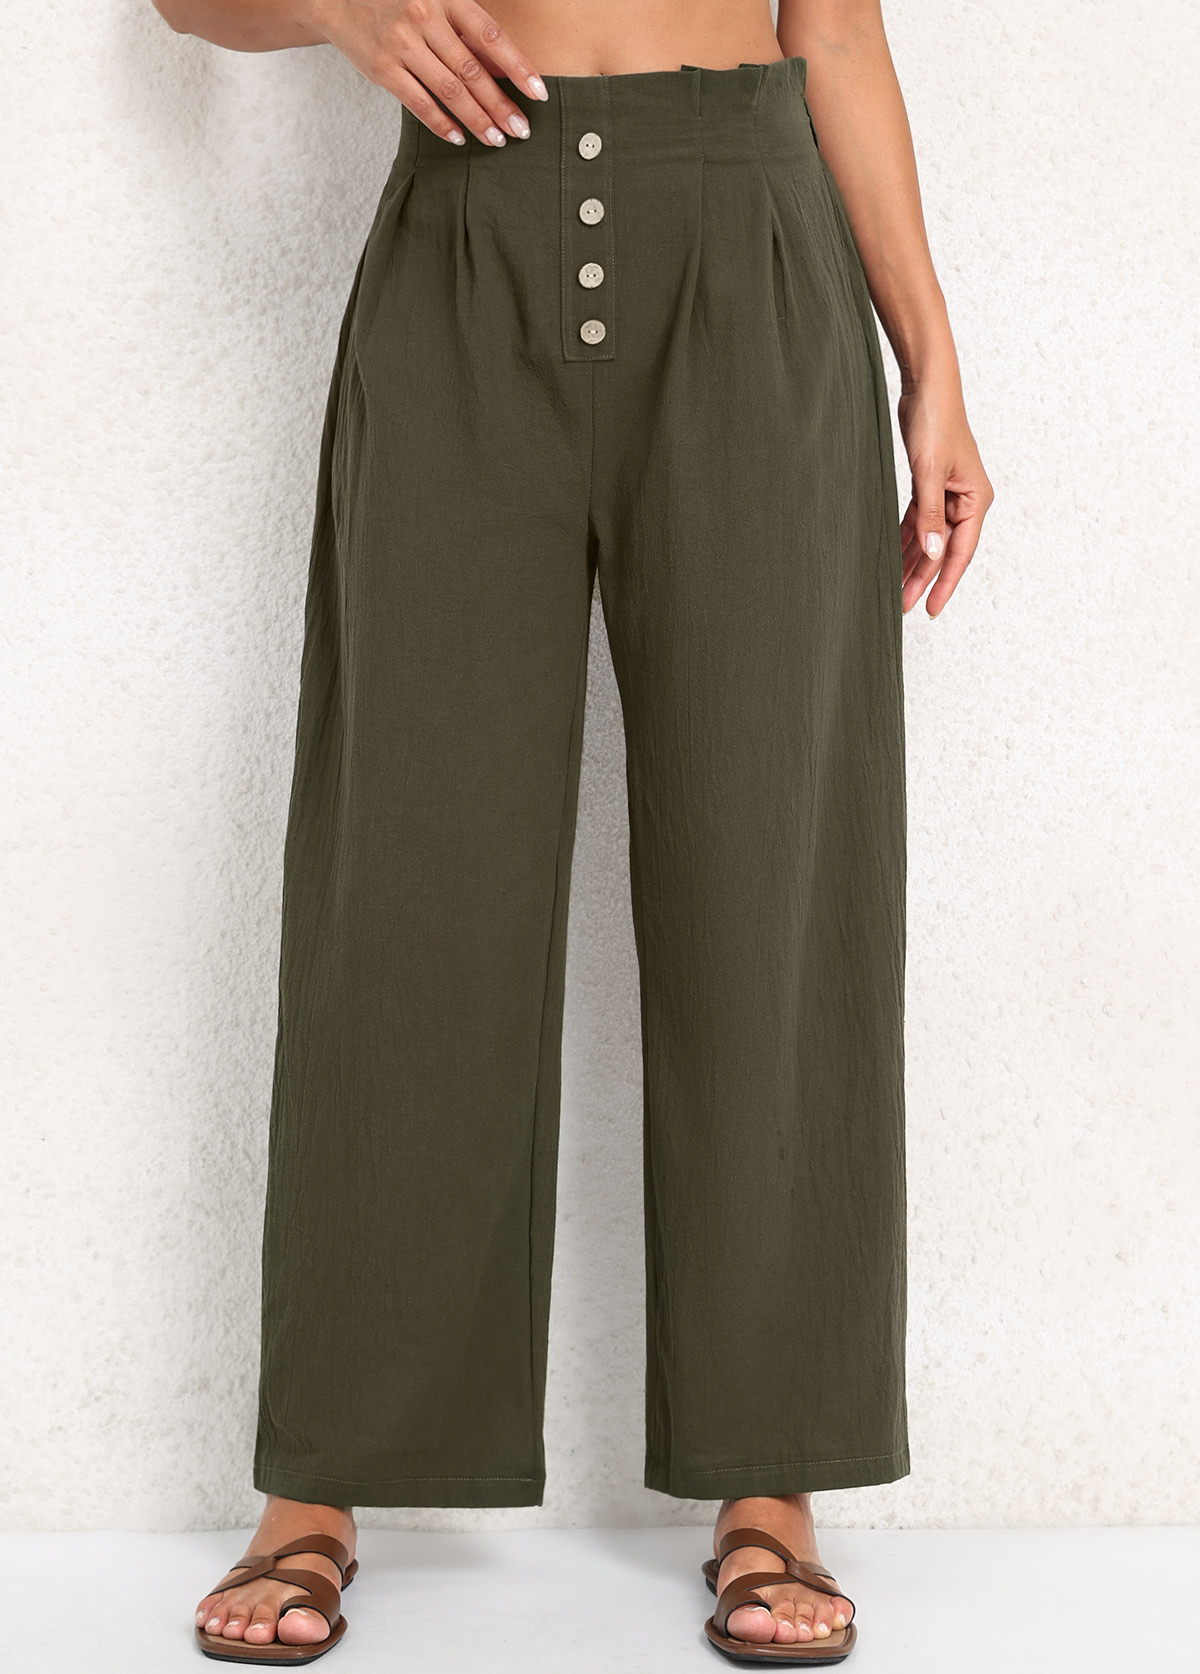 Olive Green Button Elastic Waist High Waisted Pants